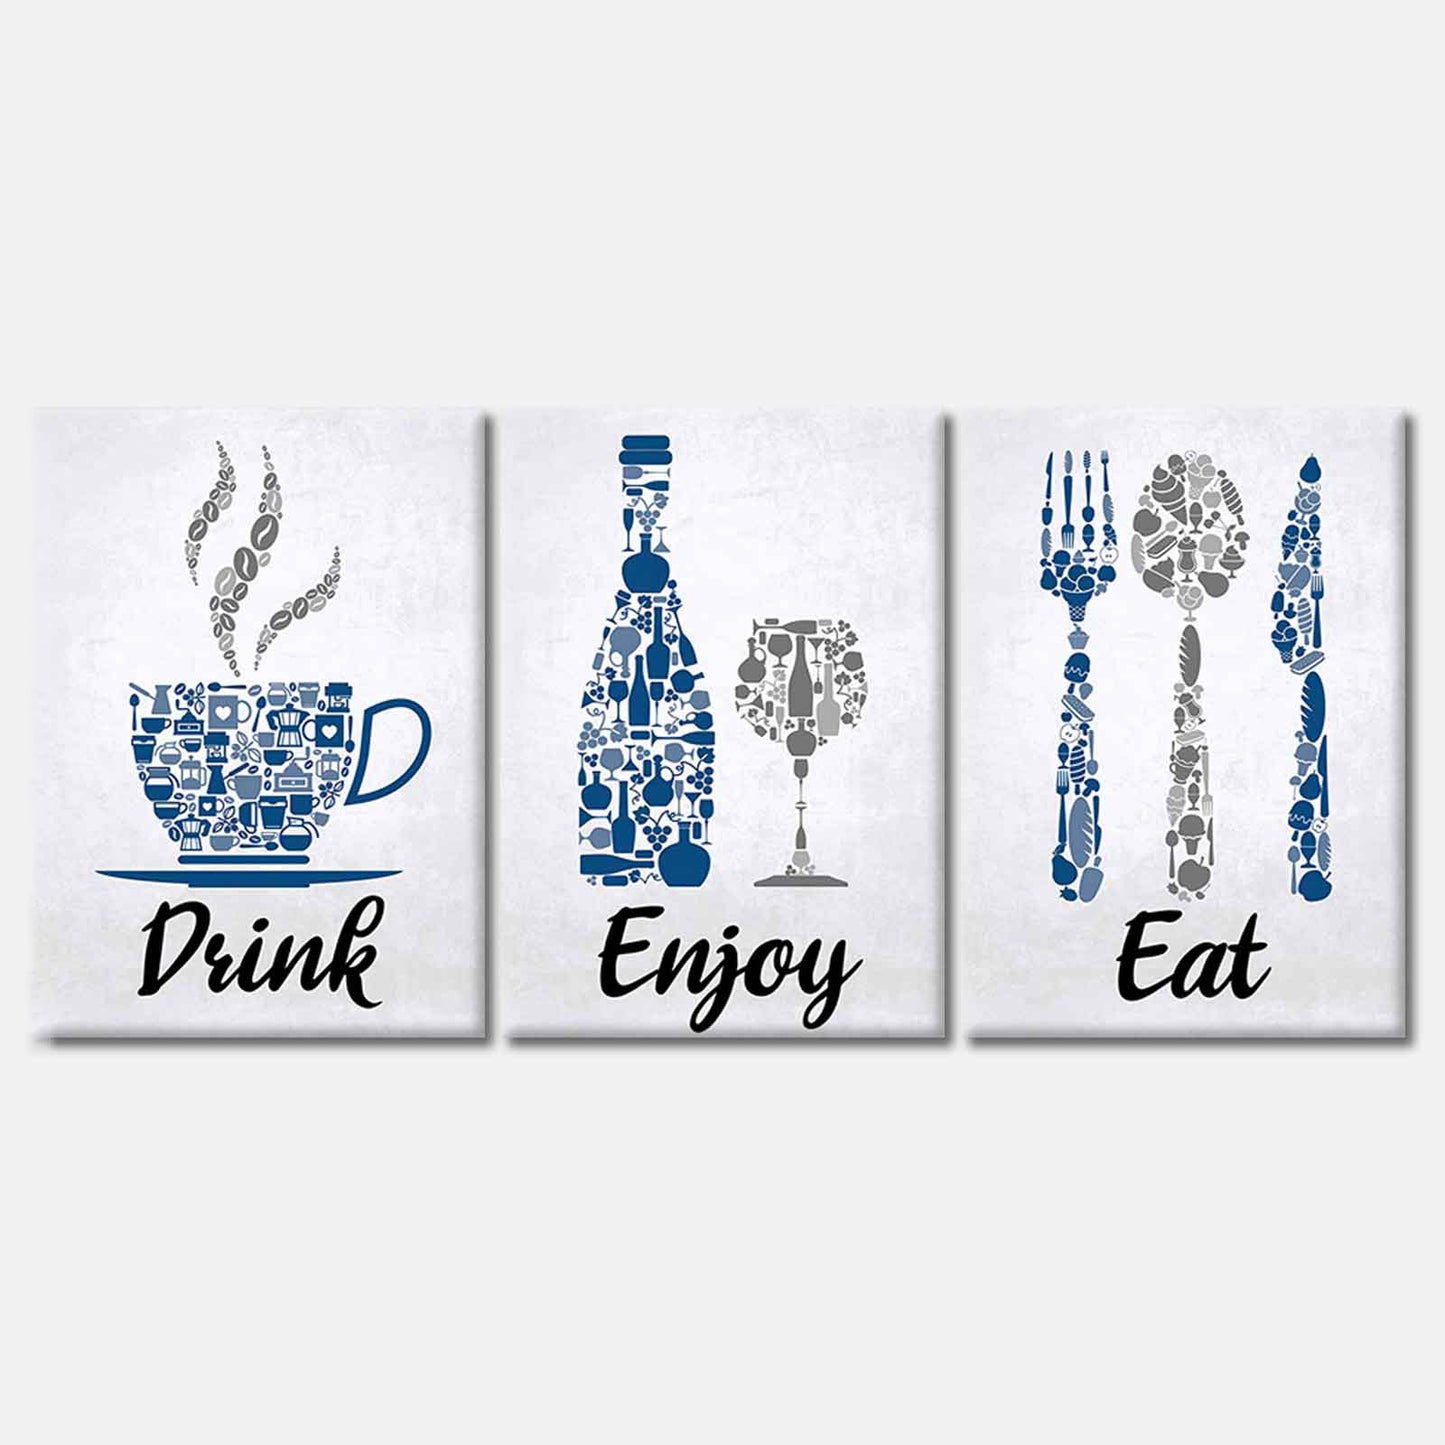 3 Set of Drink Eat Enjoy Vector Art High Quality Print 100% Australian Made Wall Canvas Ready to Hang